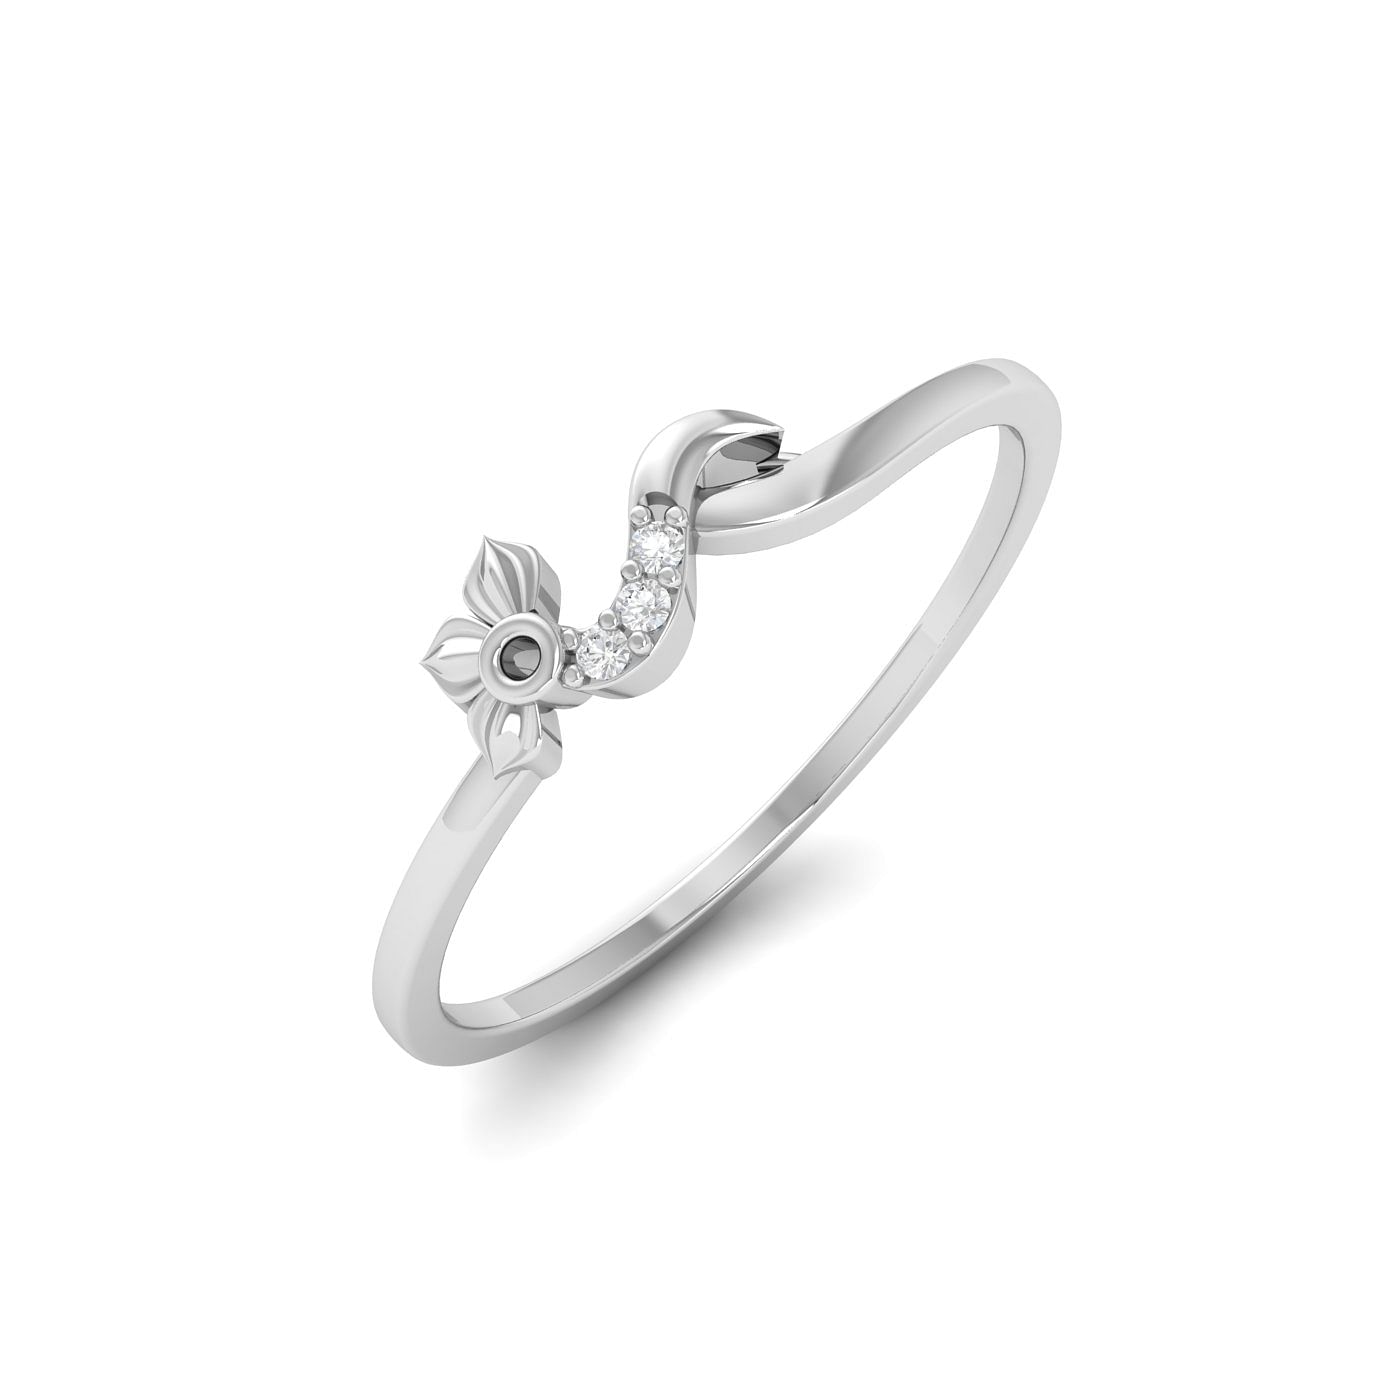 Blume Three Stone Diamond Ring 14k white gold diamond ring for her